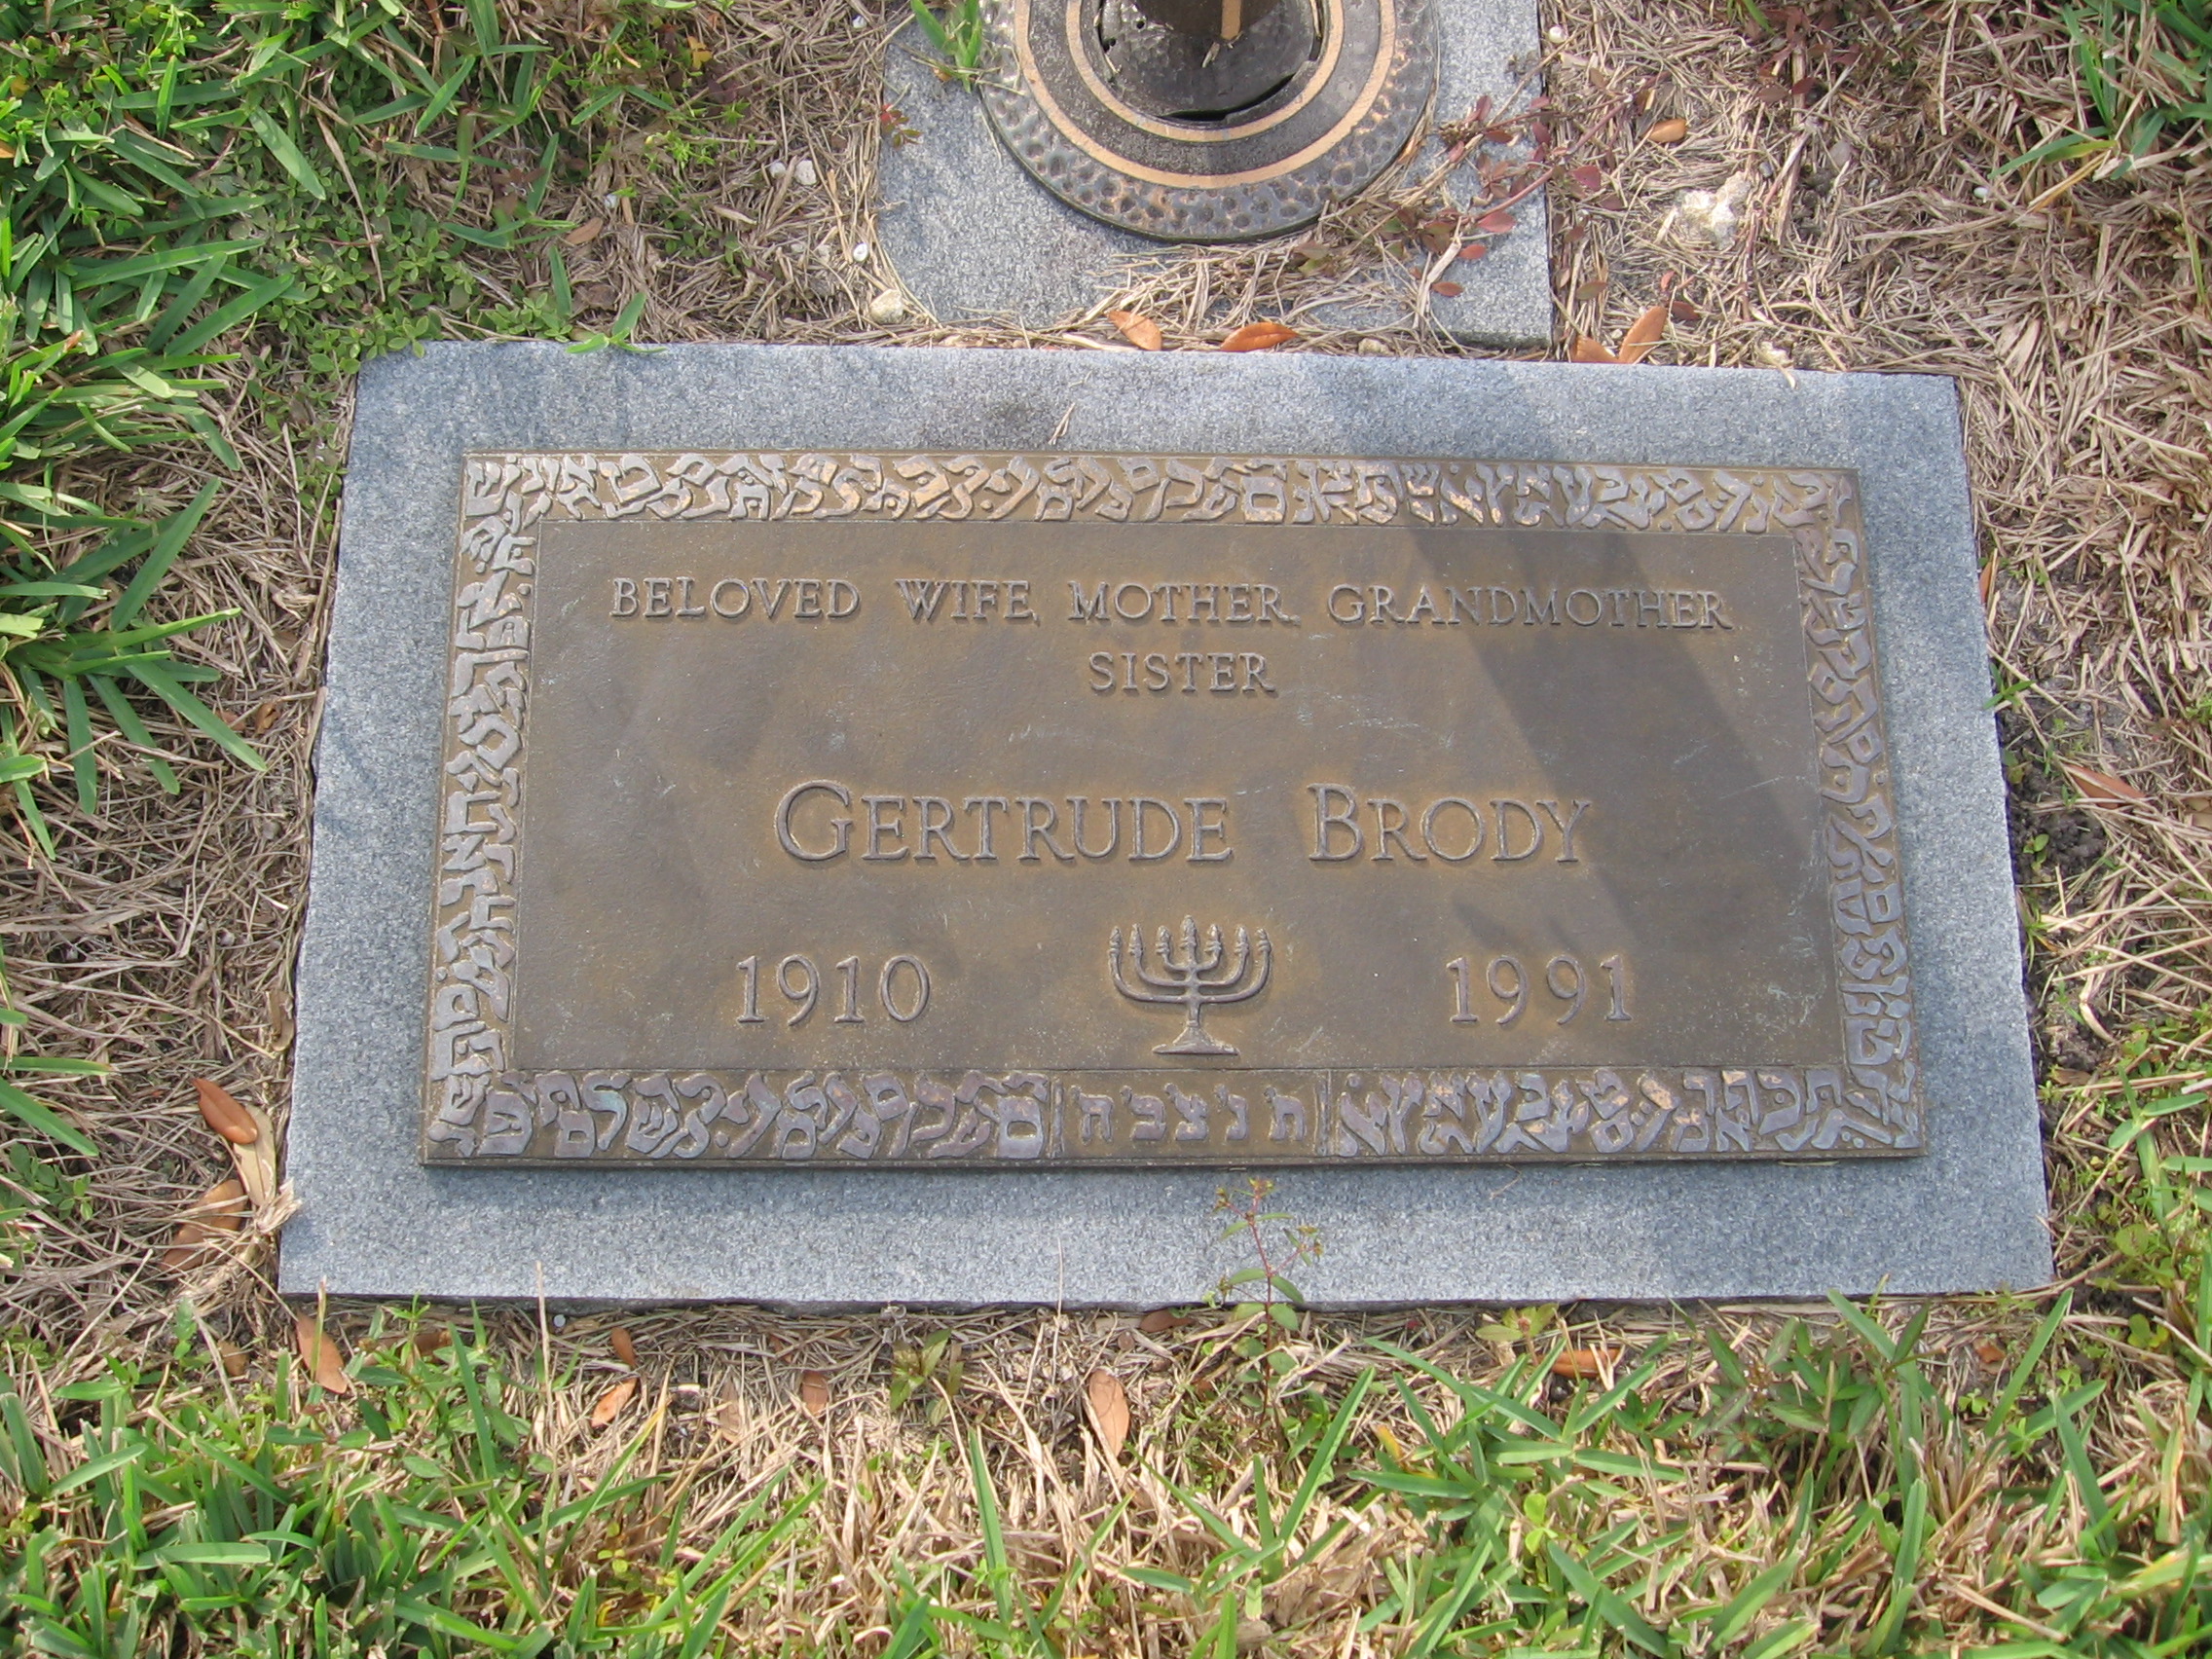 Gertrude Brody